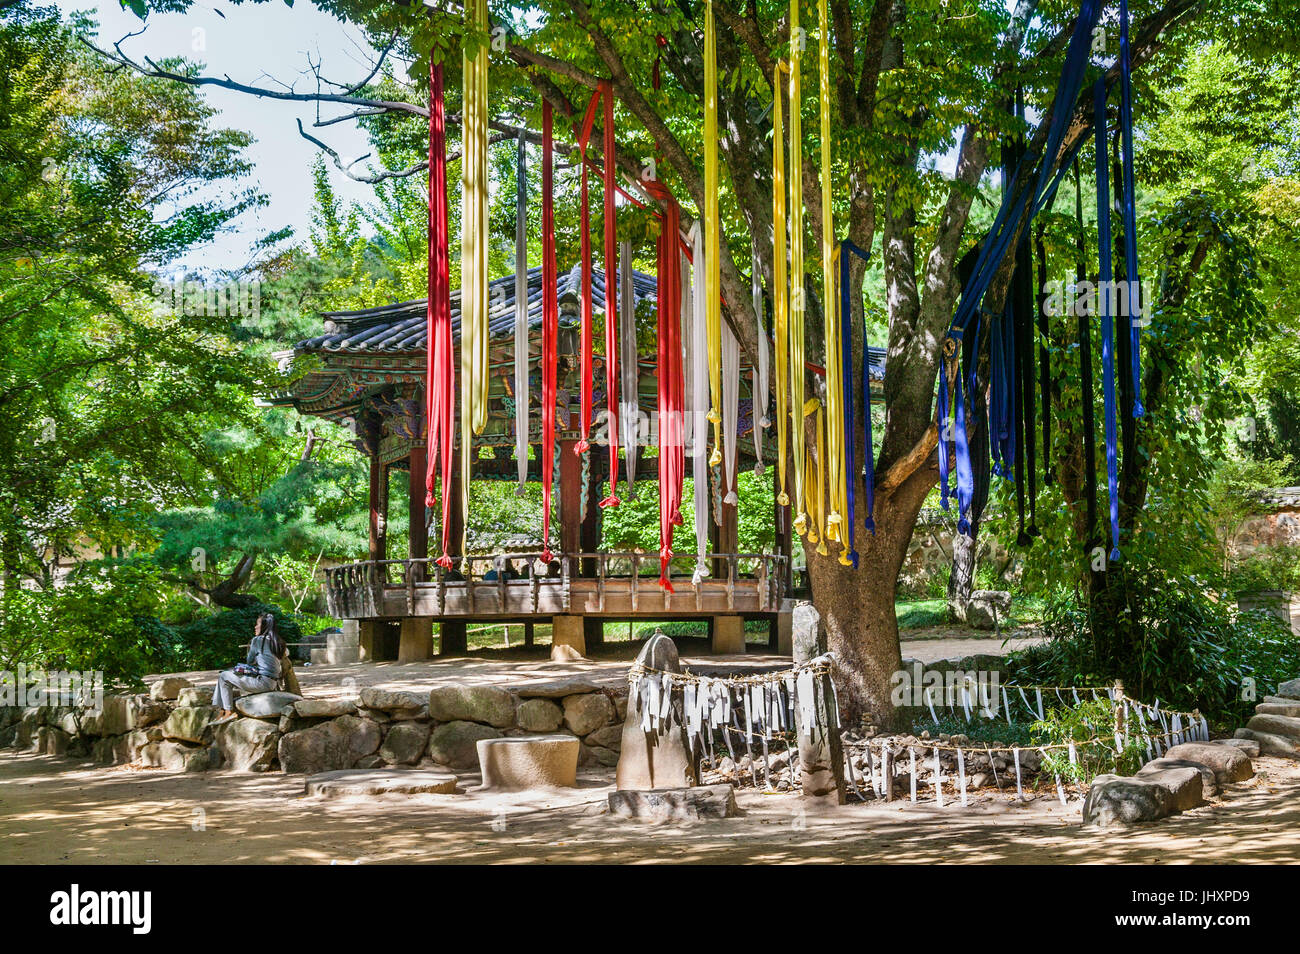 South Korea, Gyeonggi, pavilion and wishing tree at Yogin, Korean Folk village (Monsok village) Stock Photo